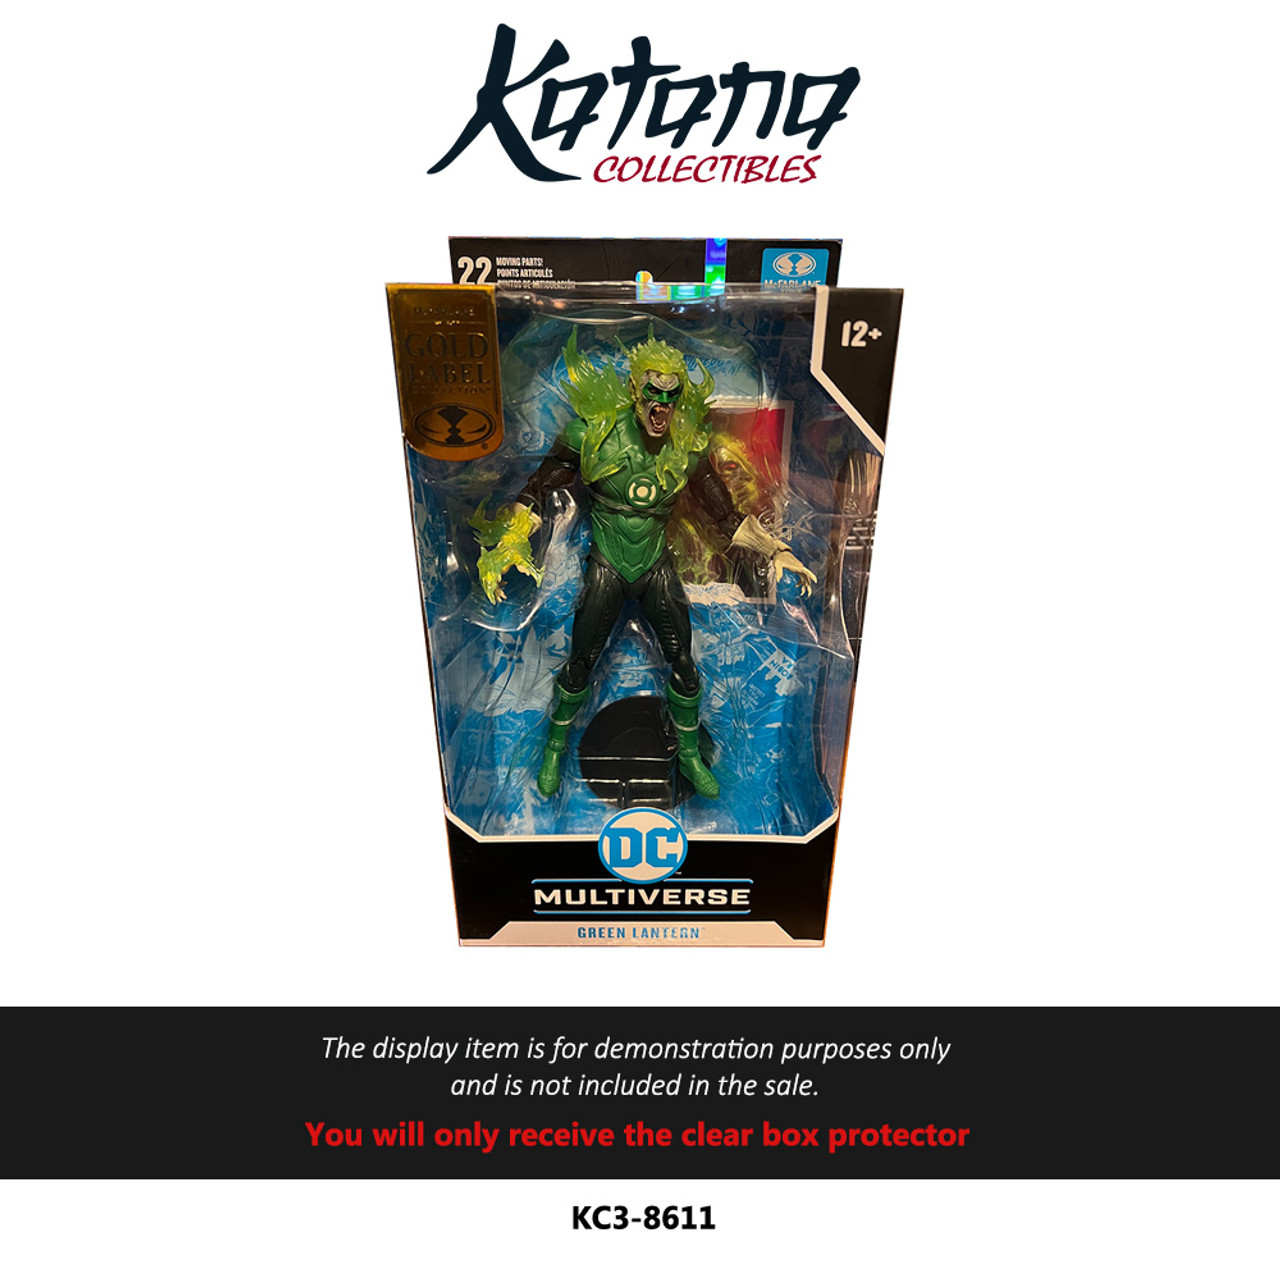 Katana Collectibles Protector For Dc Multiverse Dc Vs Vampires Green Lantern Mcfarlane Gold Label Collection